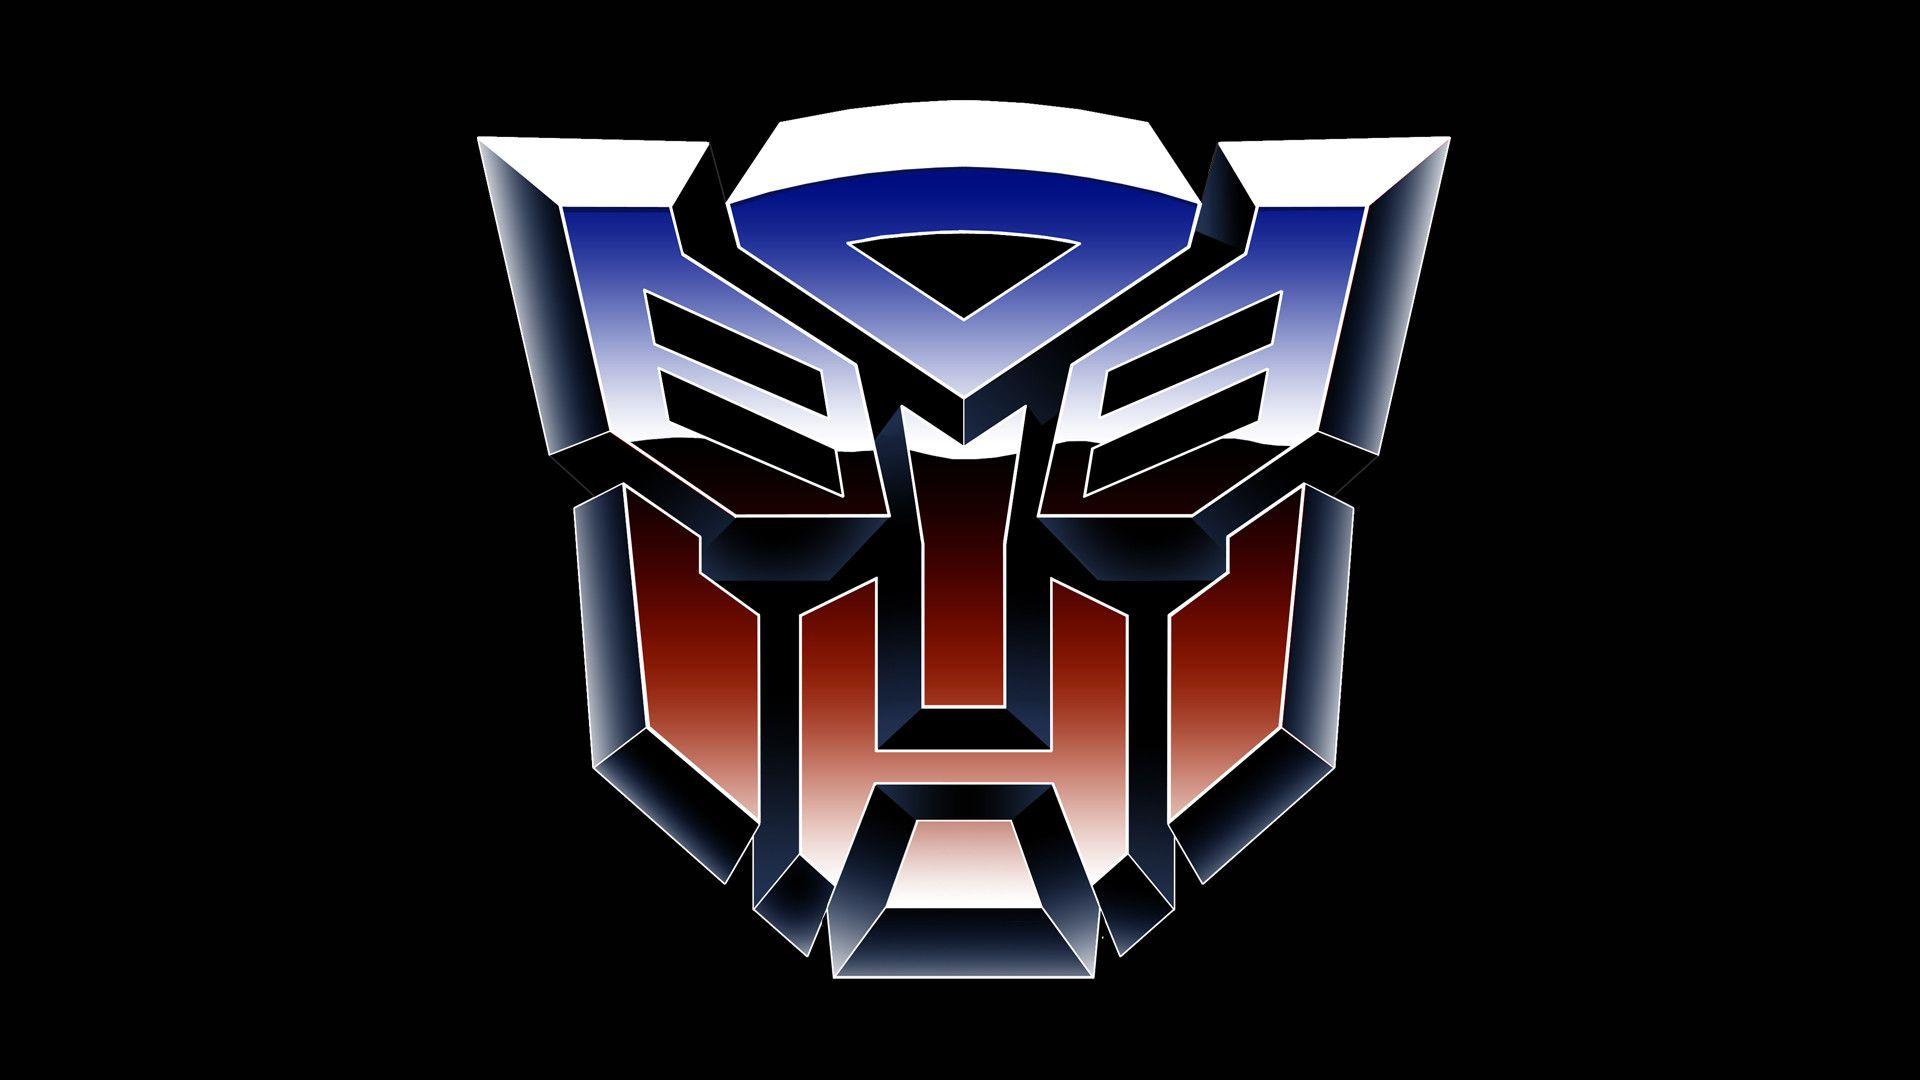 Cool Autobot Logo - Autobot Symbol Wallpaper ·①